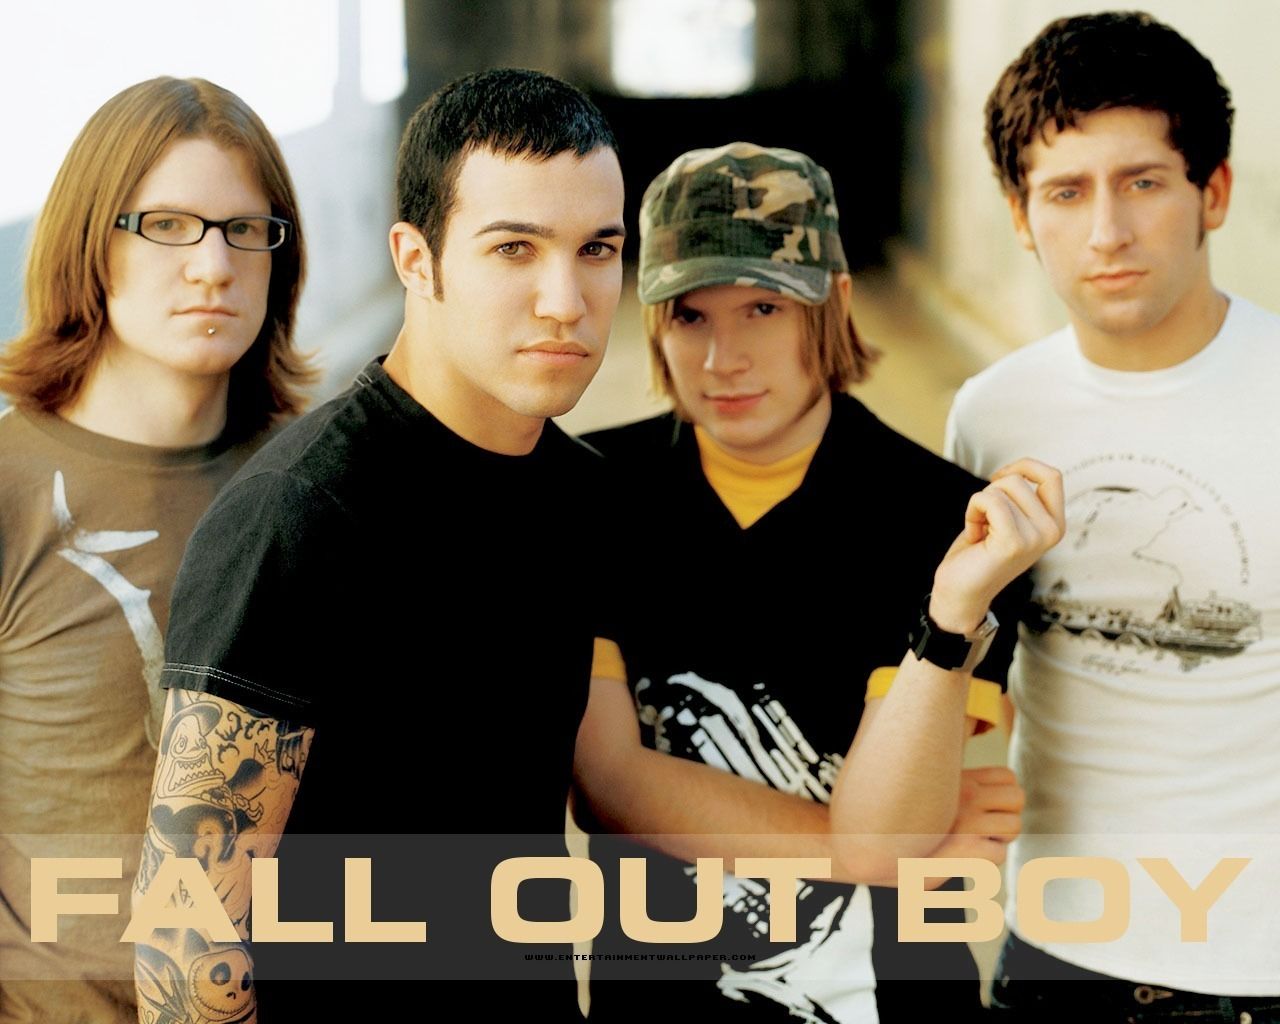 FallOutBoy - Fall Out Boy Wallpaper 6458425 - Fanpop